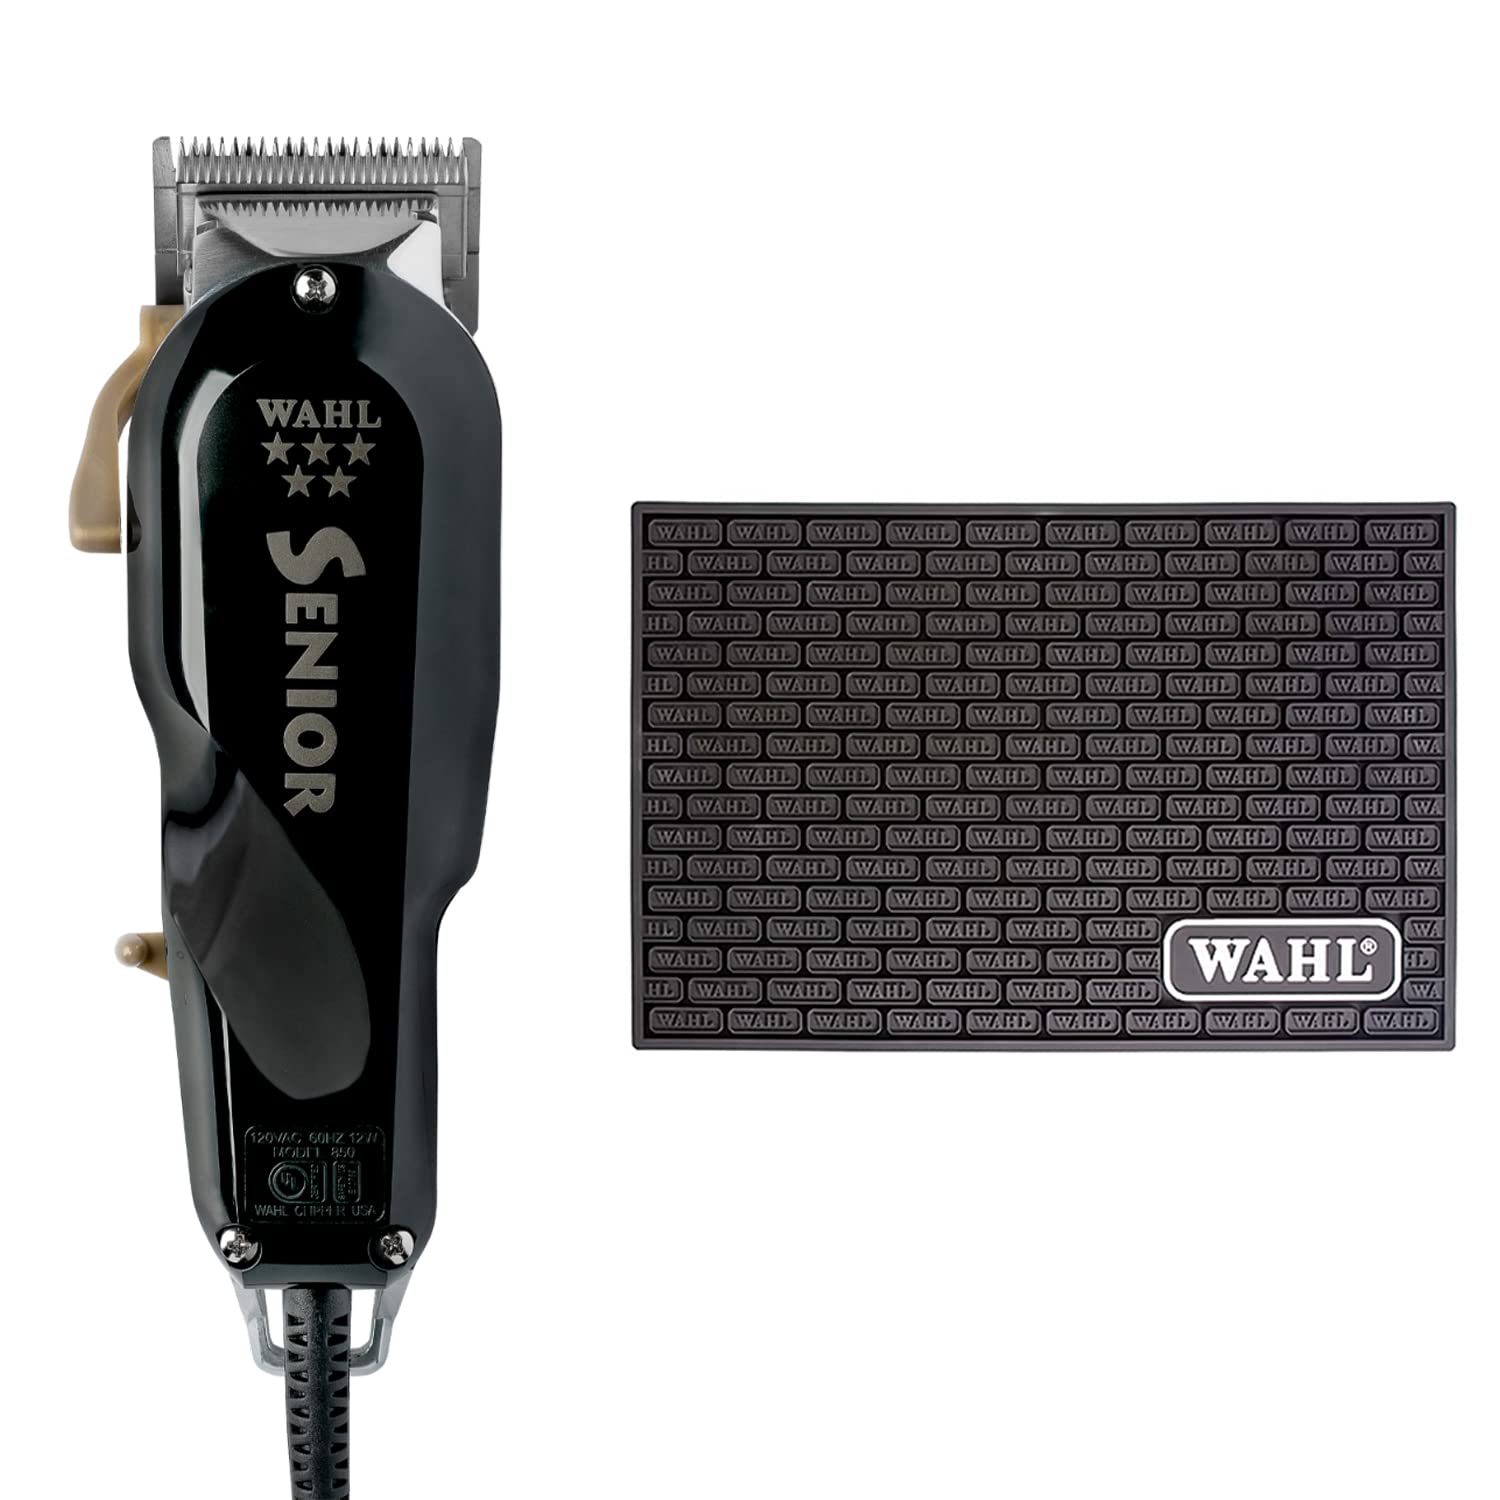 Wahl Professional 5 Star Series Senior Clipper & Wahl Professional Tool Mat for Clippers, Trimmers & Haircut Tools Bundle